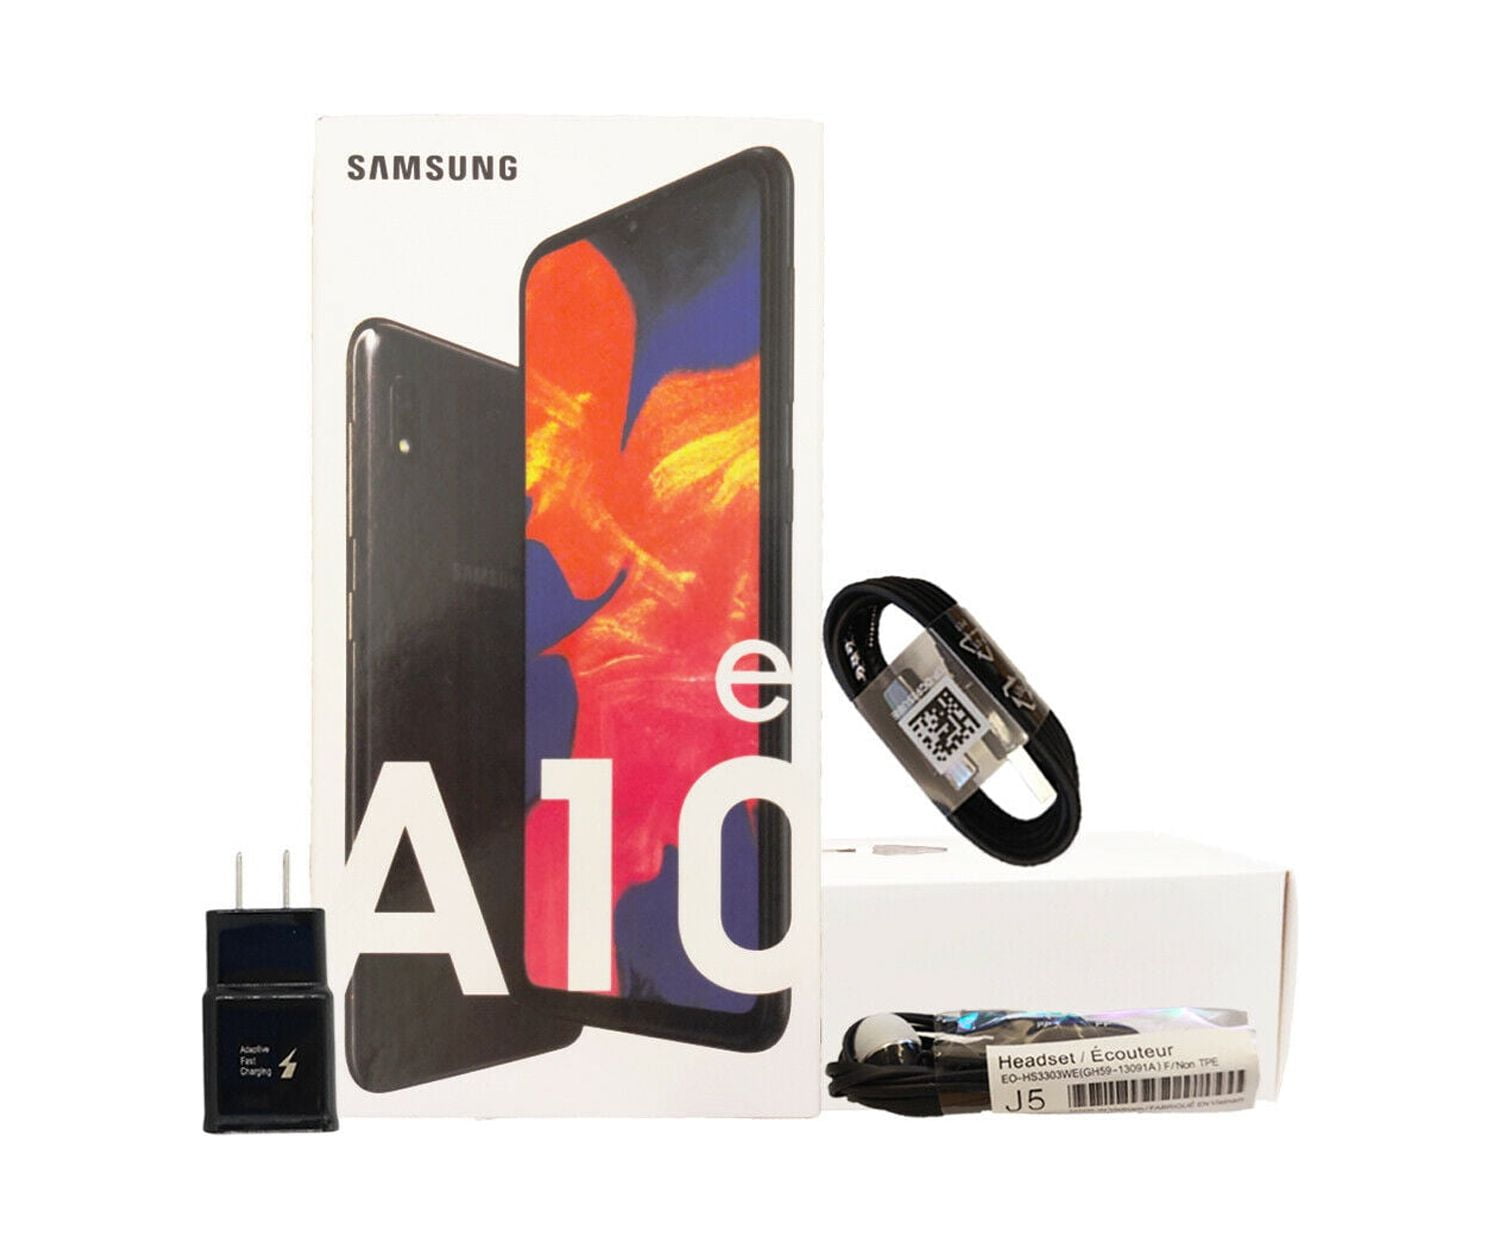 Fully Unlocked Samsung Galaxy A10e 32GB Black with Retail Box